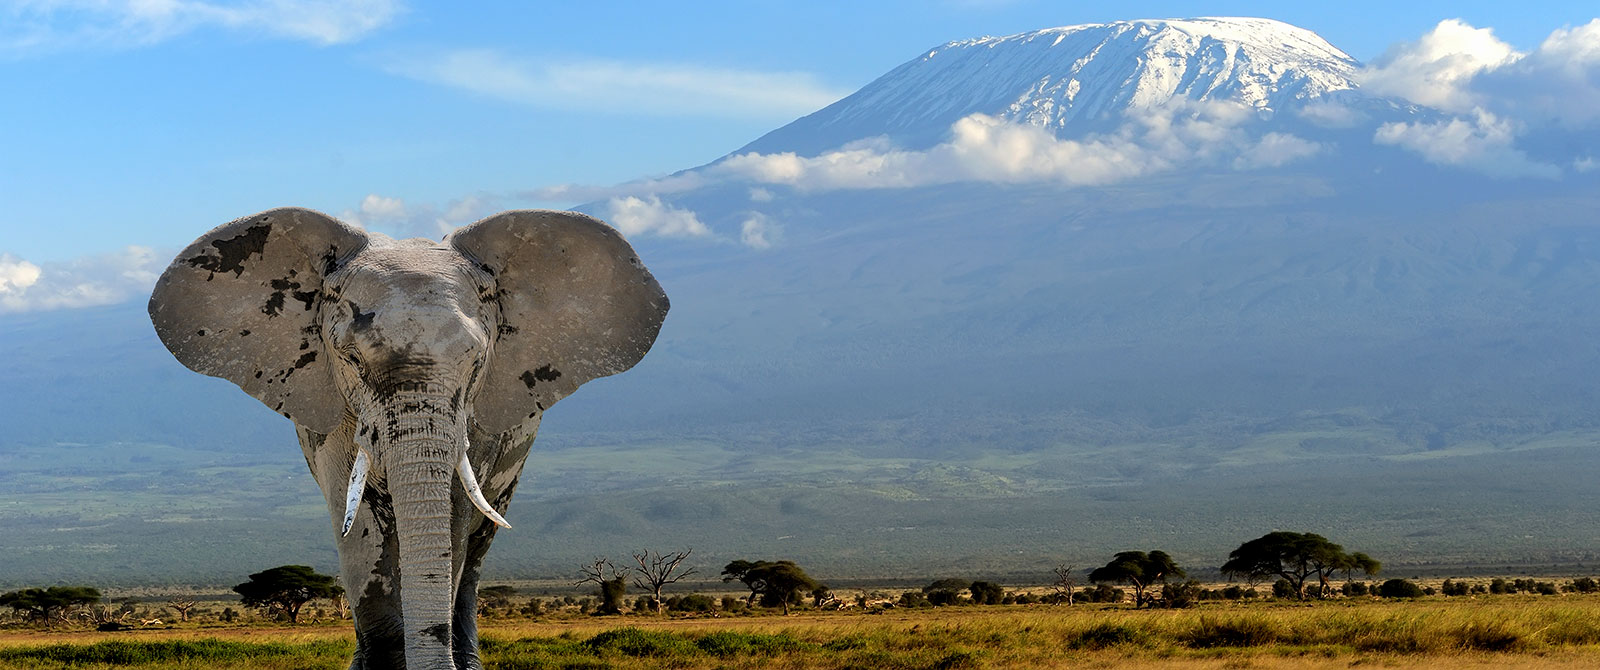 Elephant in Front of Mt Kilimanjaro - Amboseli National Park Kenya - Luxury Air Safari: Kenya Adventure Package